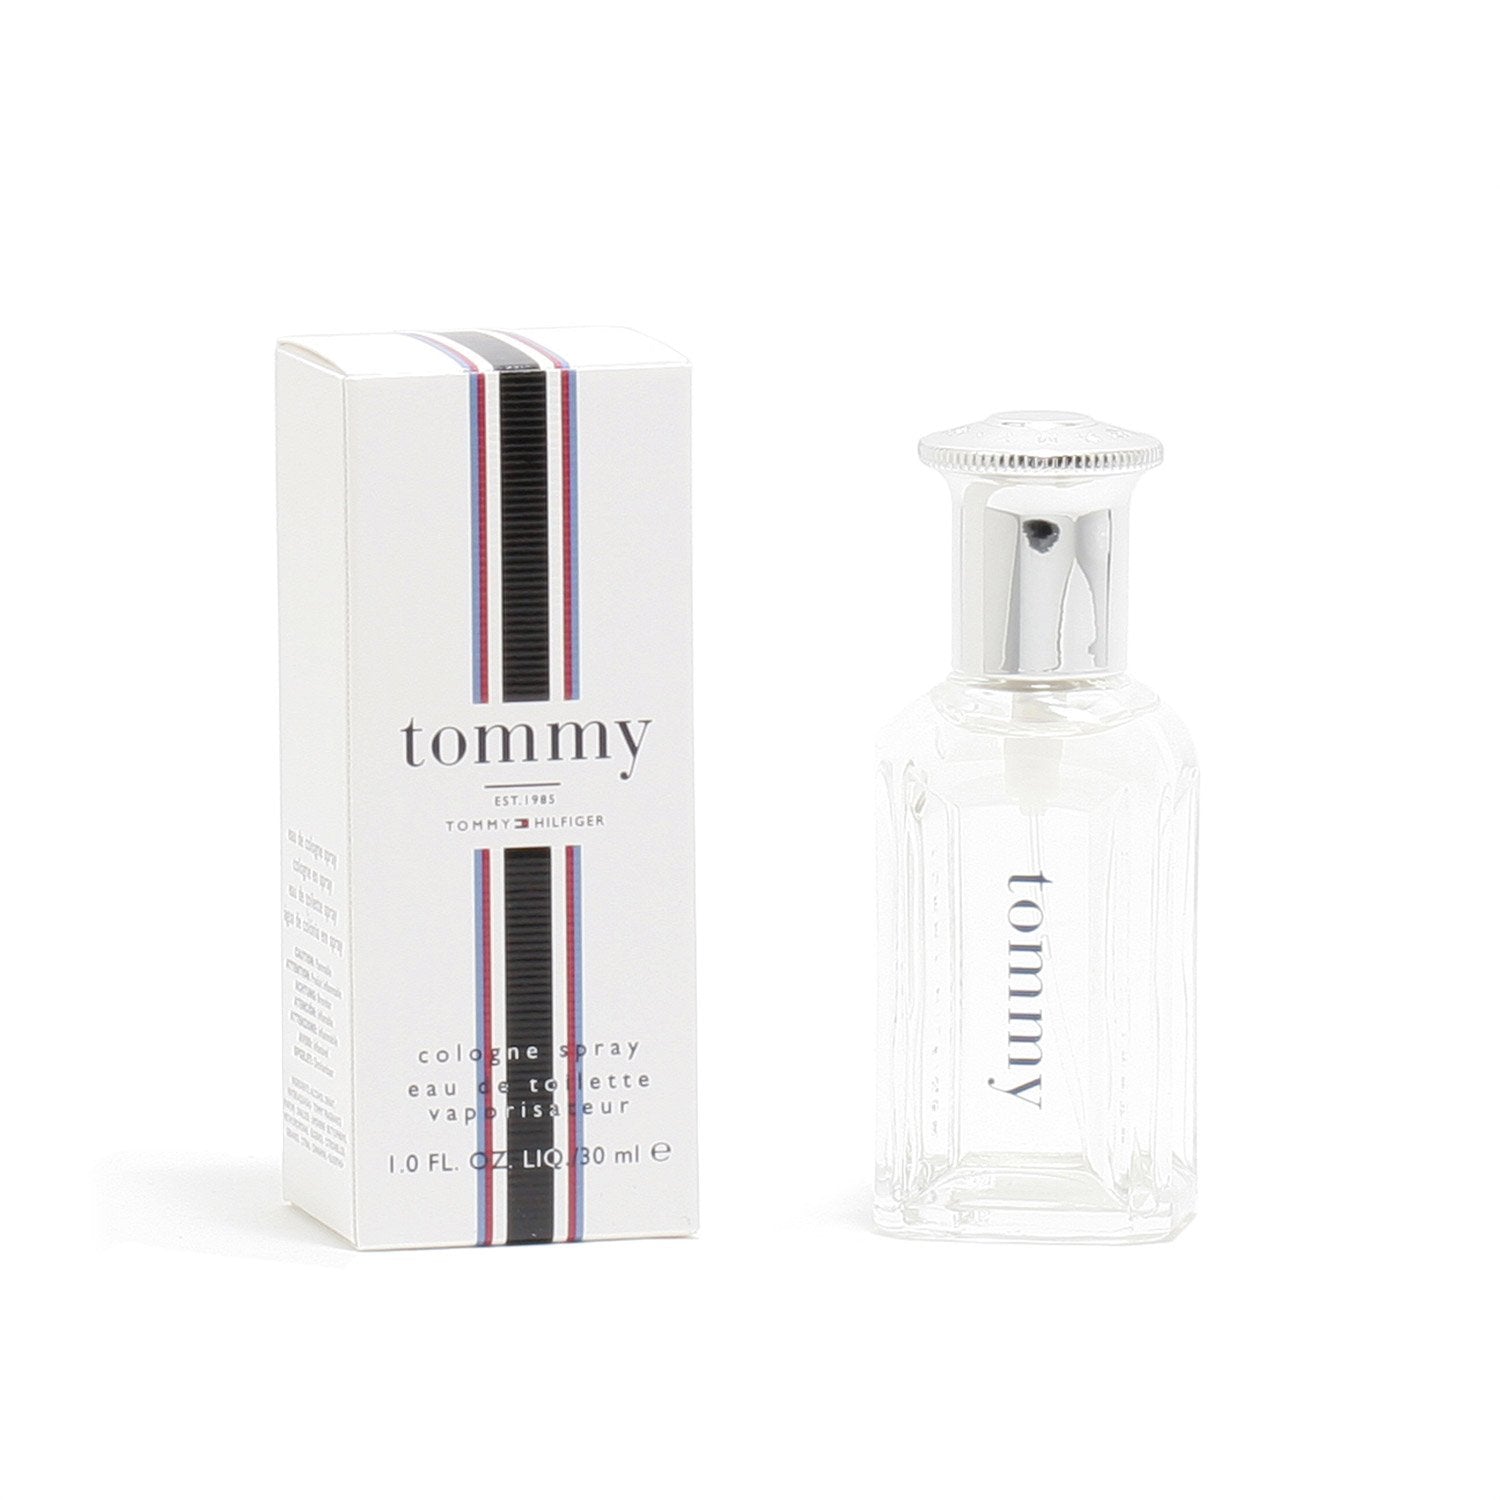 TOMMY FOR MEN BY TOMMY HILFIGER - COLOGNE SPRAY, 1.0 OZ – Fragrance Room